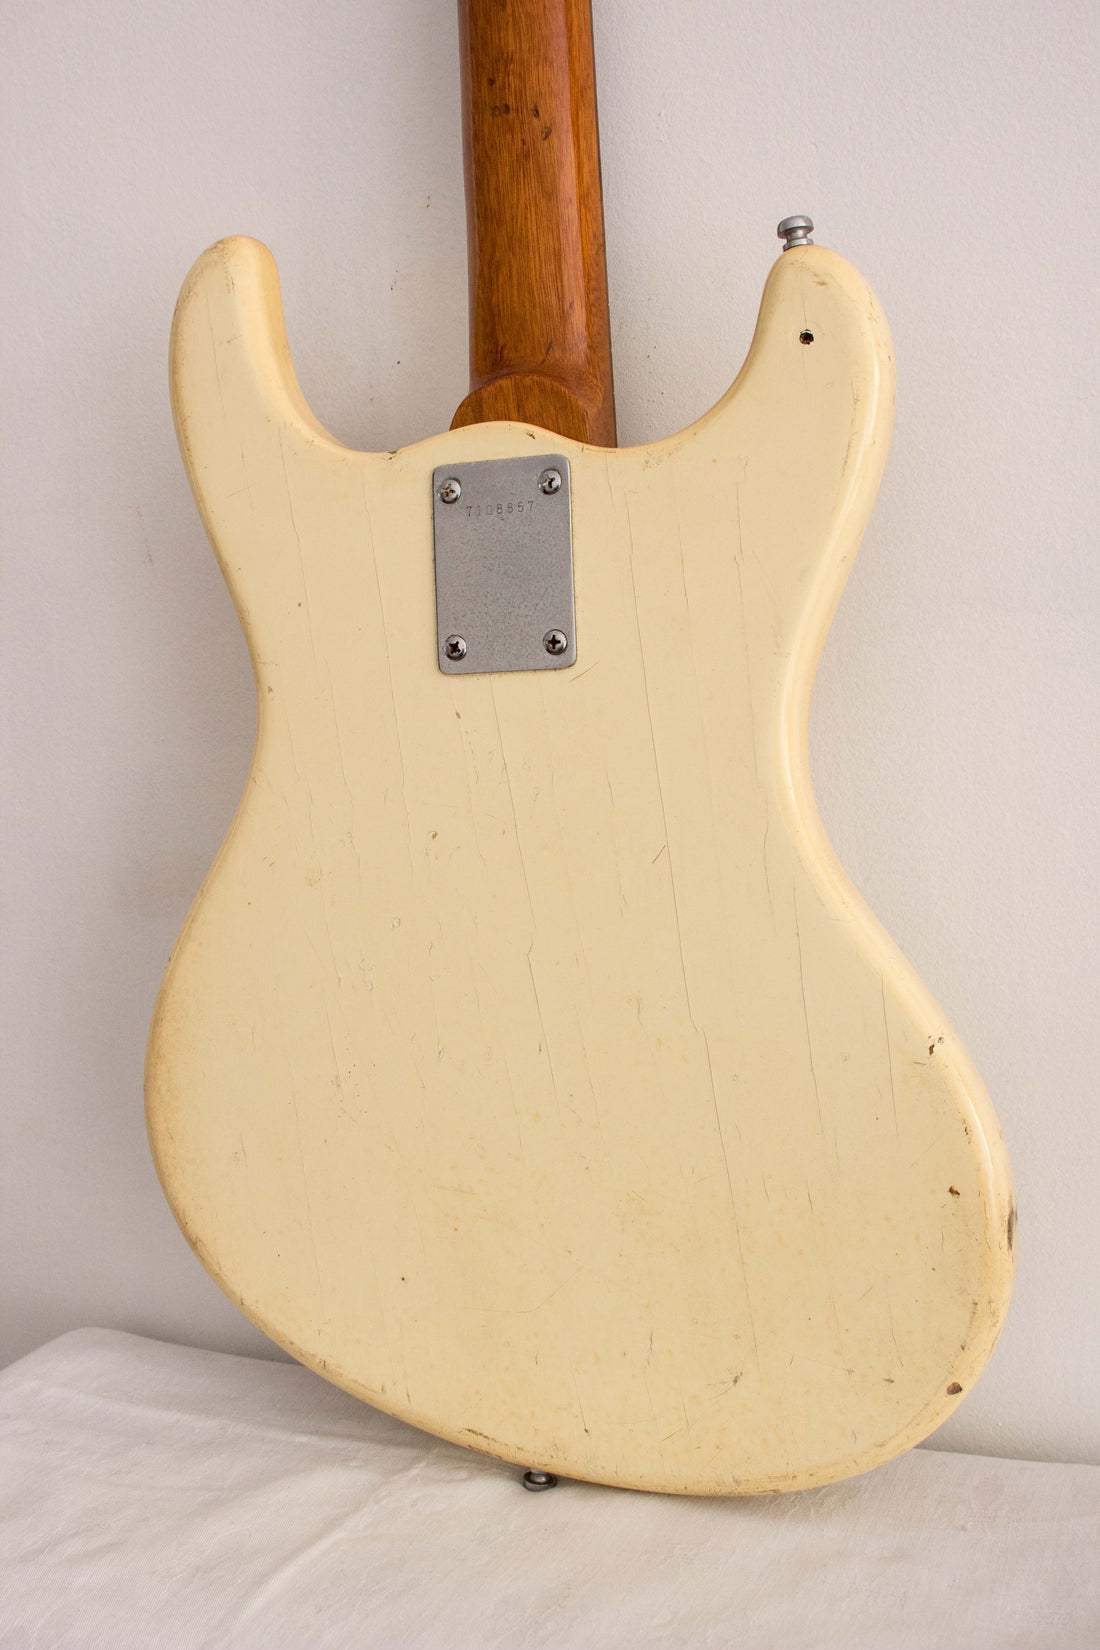 Guyatone EB-1 Short Scale Bass White 1967